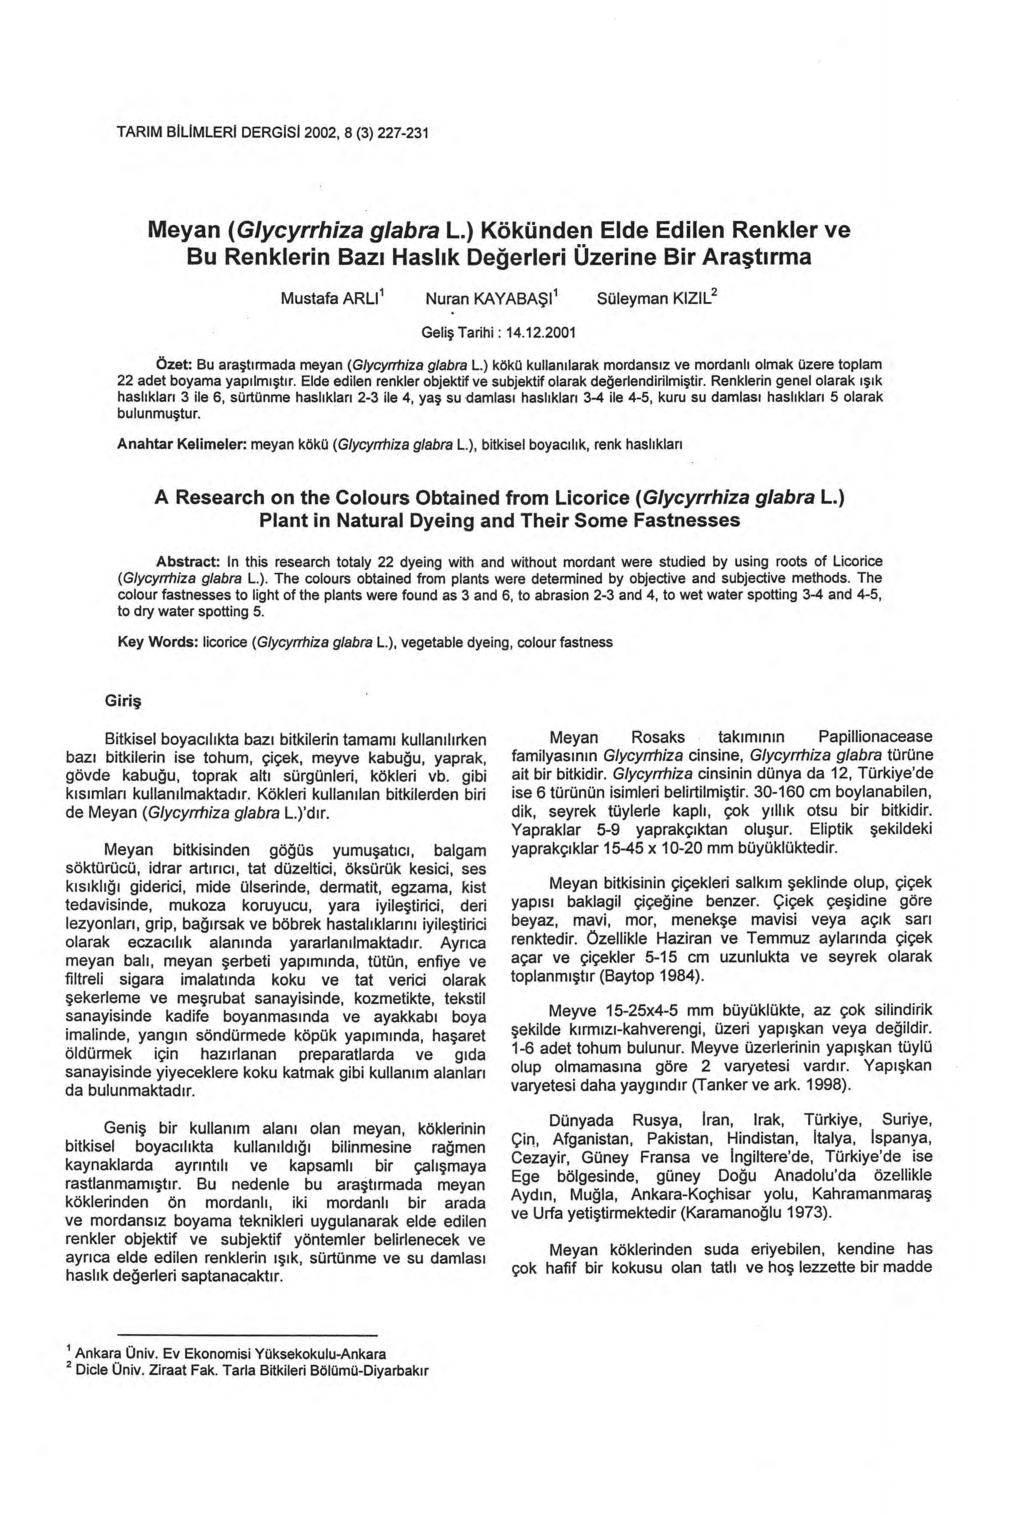 TARIM BILIMLERI DERGISI 2002, 8 (3) 227-231 Meyan (Glycyrrhiza glabra L.